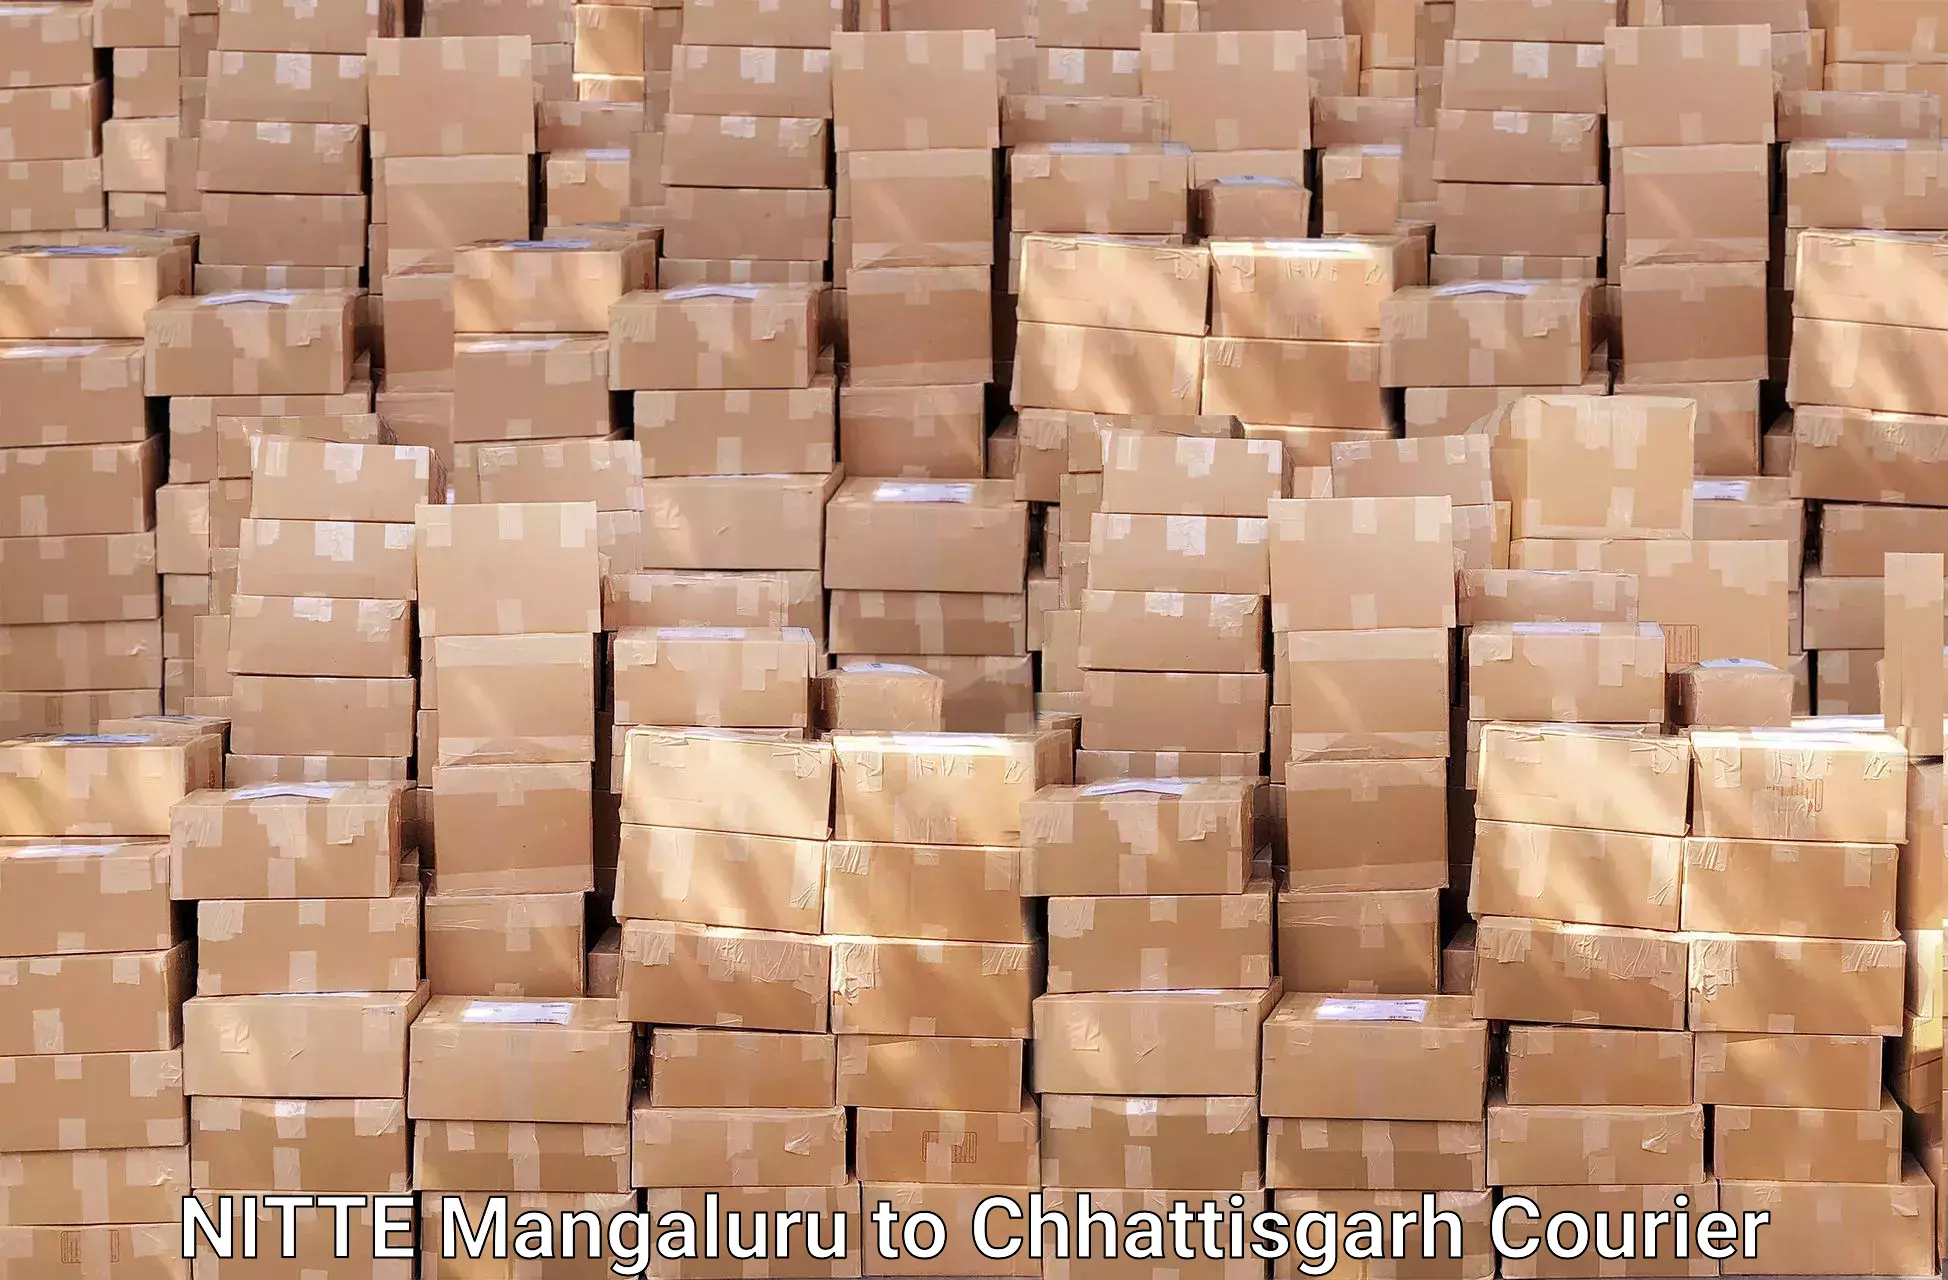 Professional packing services NITTE Mangaluru to Bilaspur